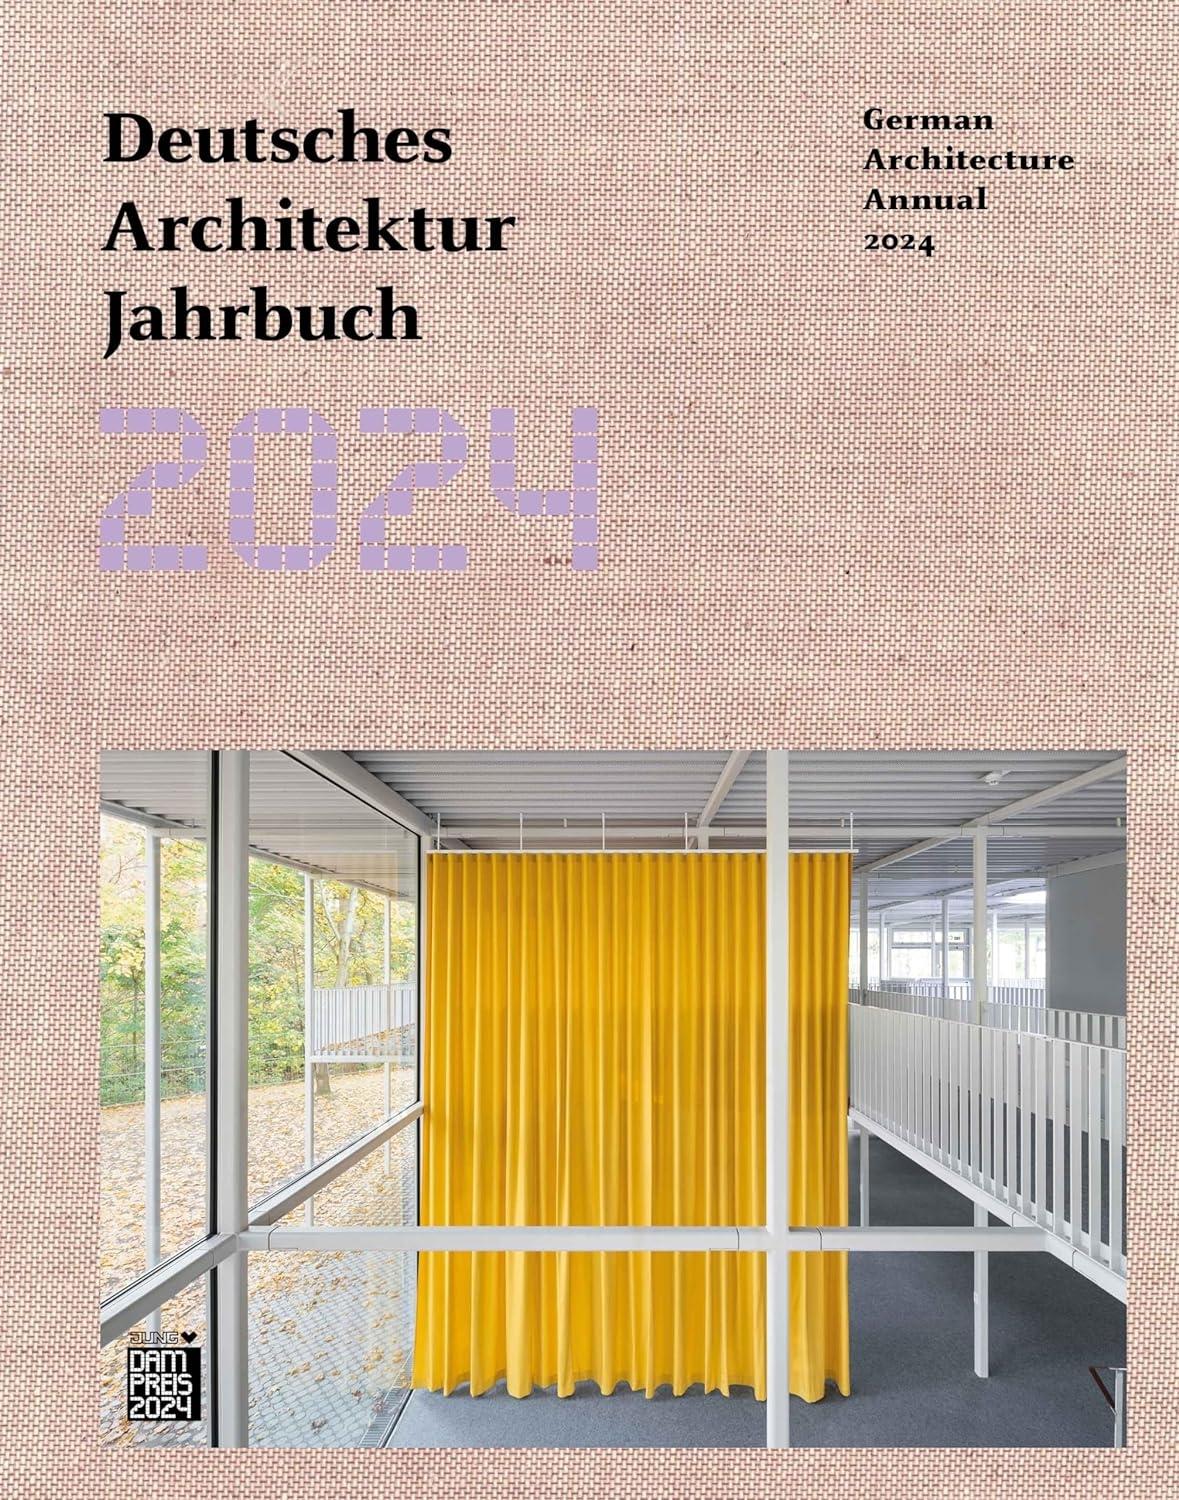 GERMAN ARCHITECTURE ANNUAL 2024